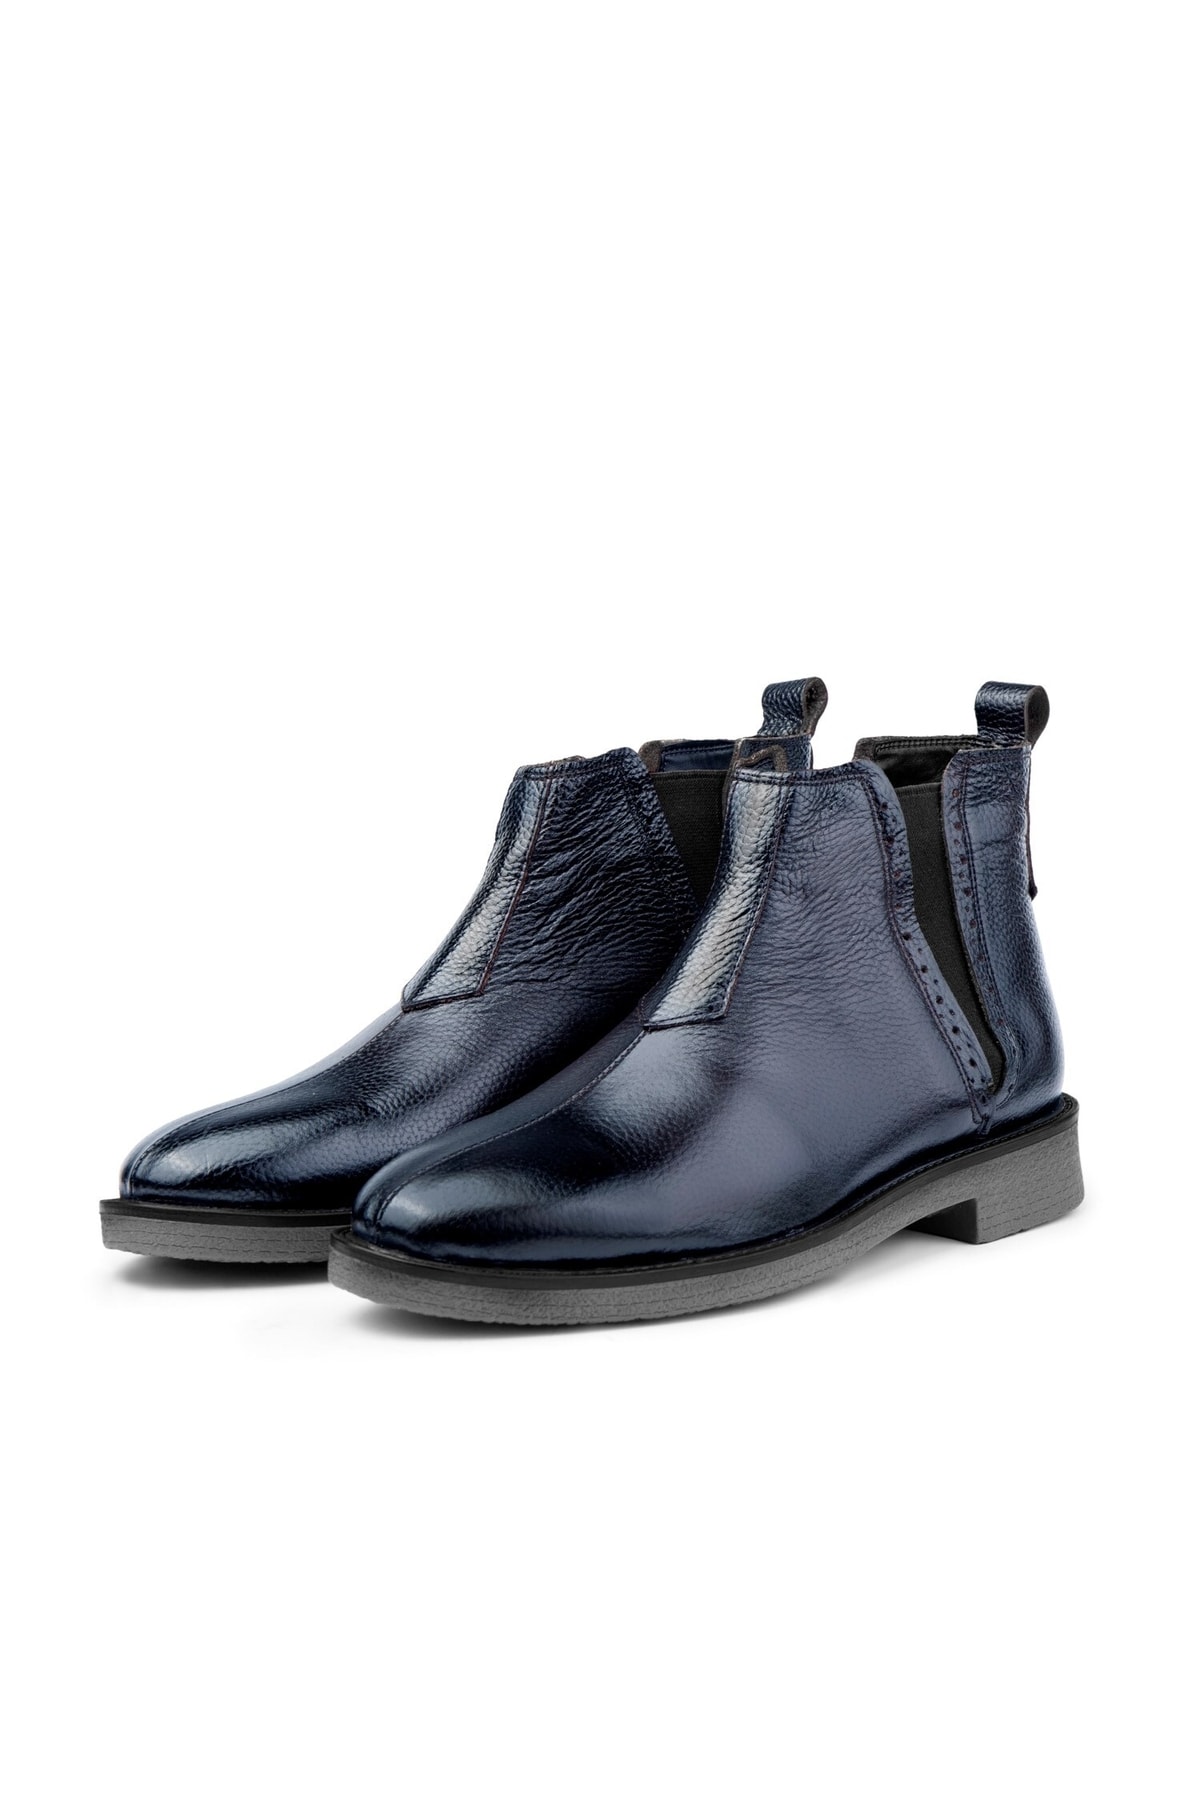 Levně Ducavelli Leeds Genuine Leather Non-Slip Sole Chelsea Daily Boots Navy Blue